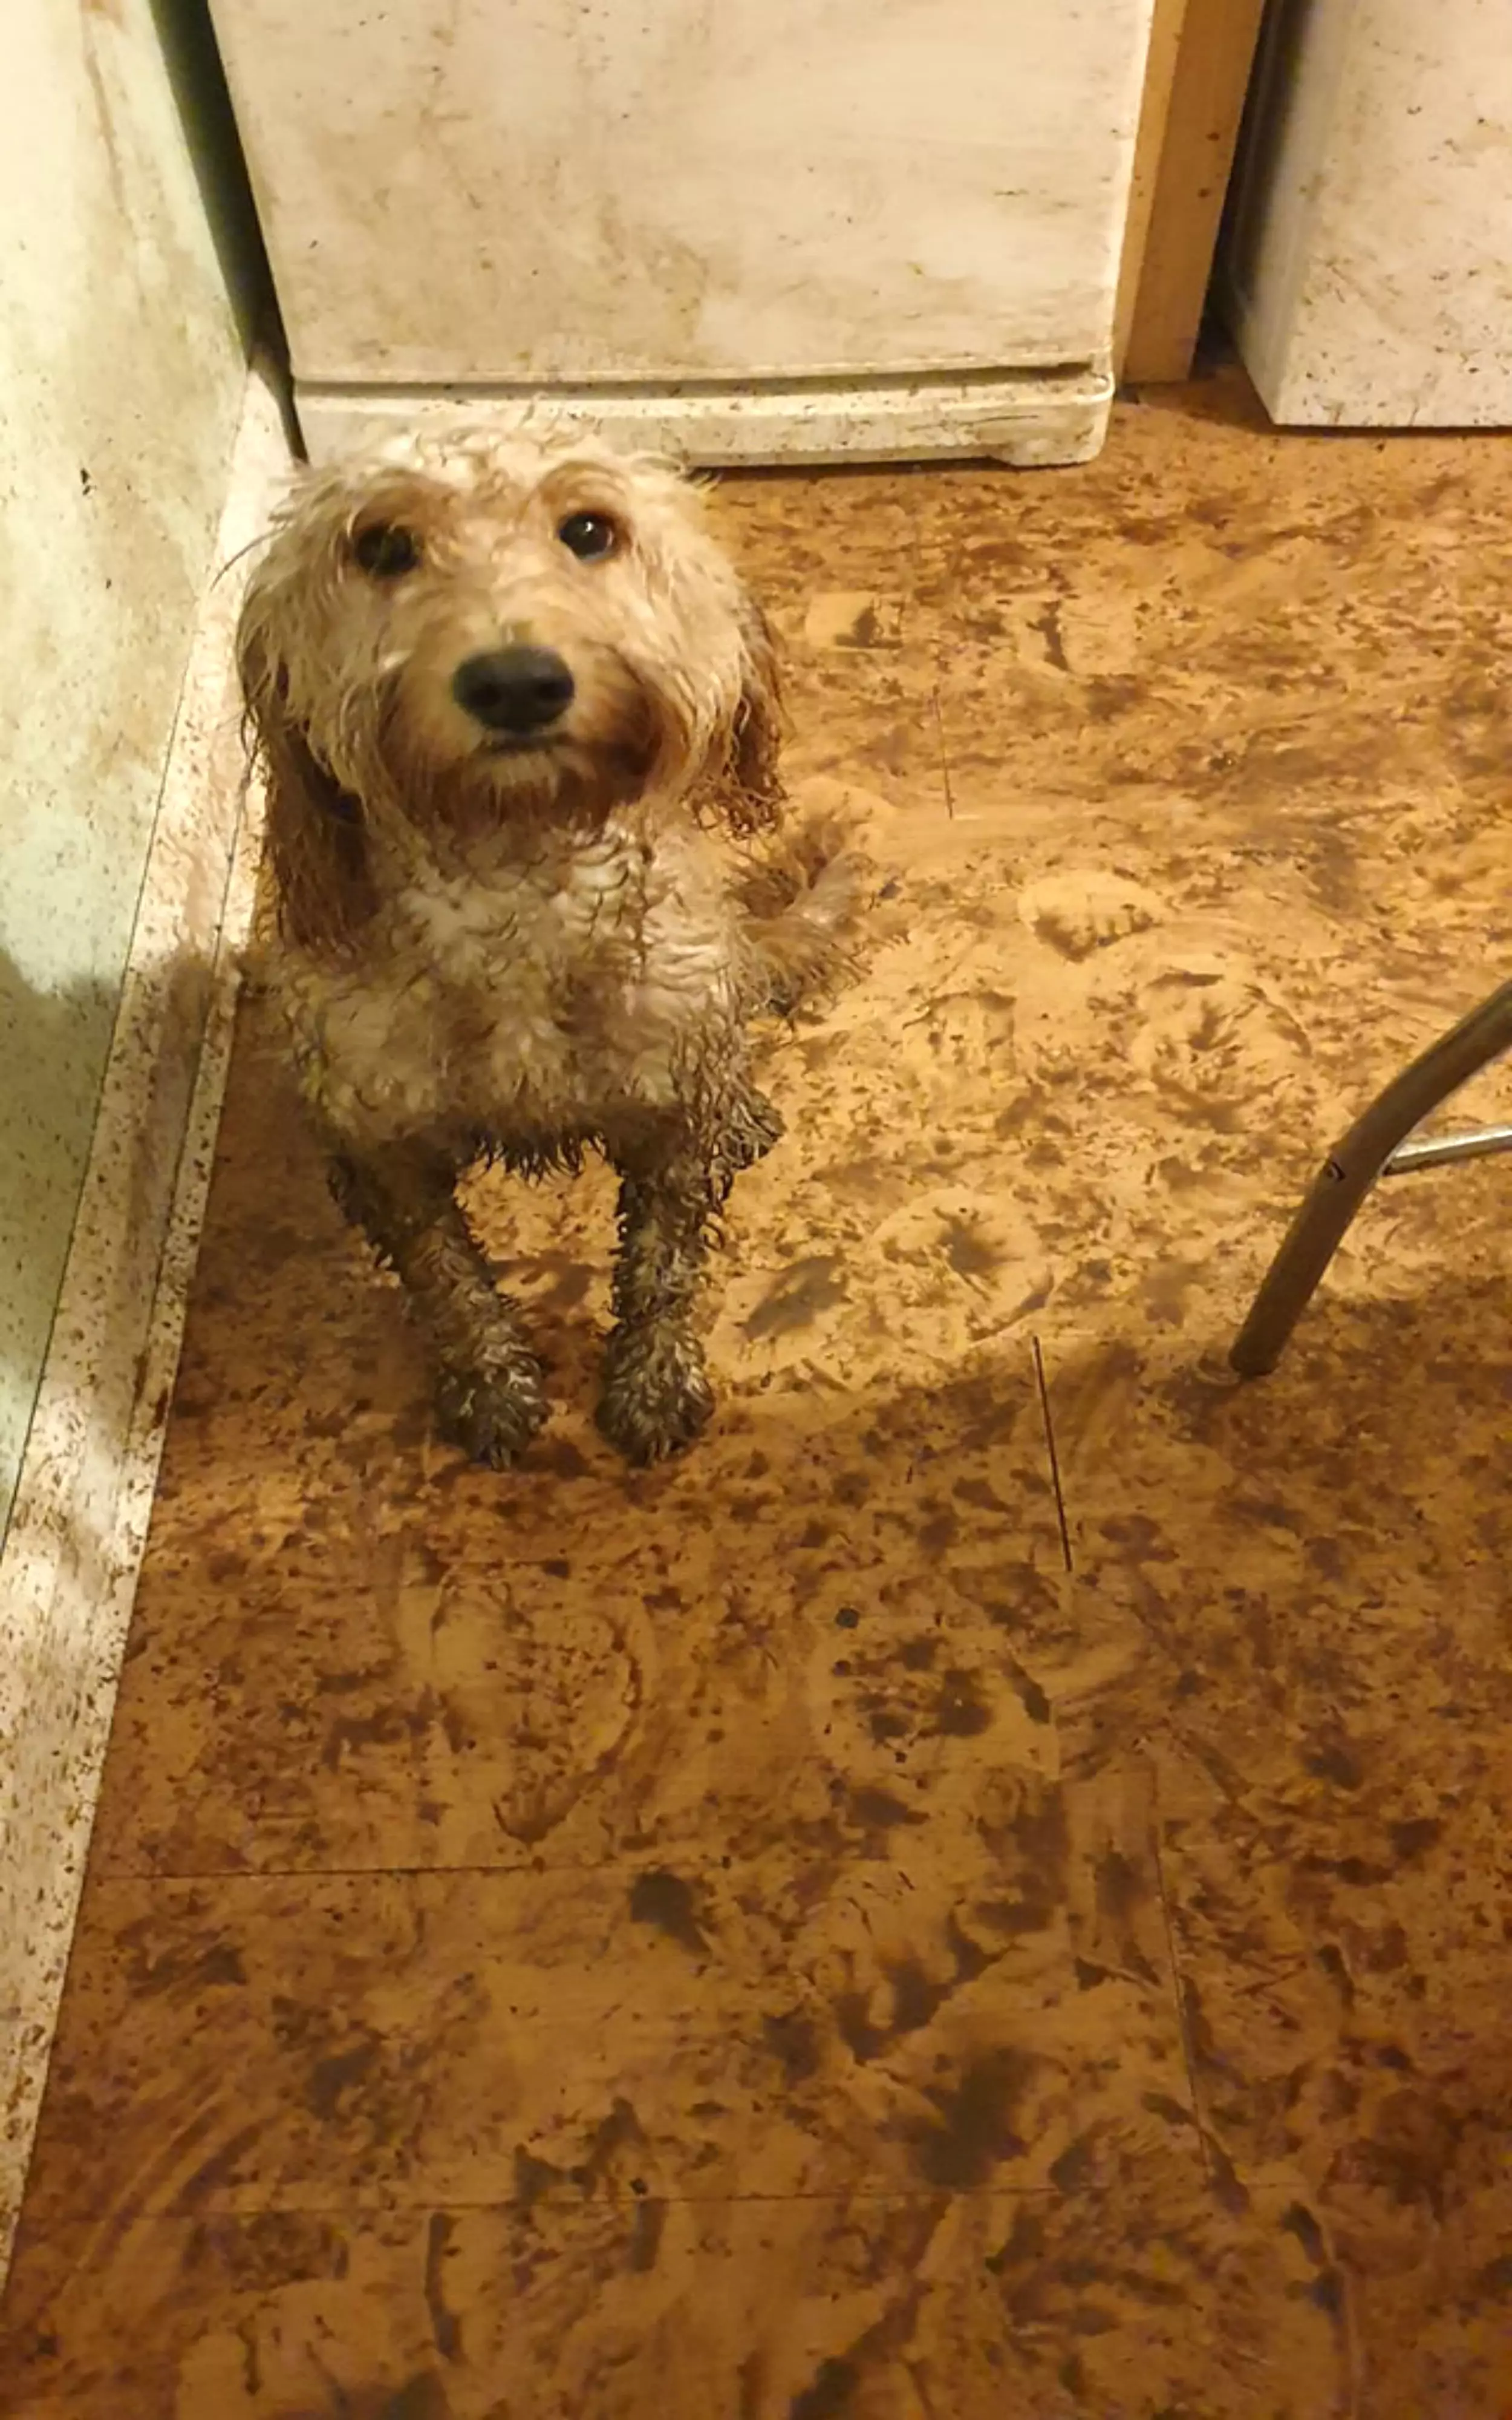 Maddie caked the kitchen in mud.